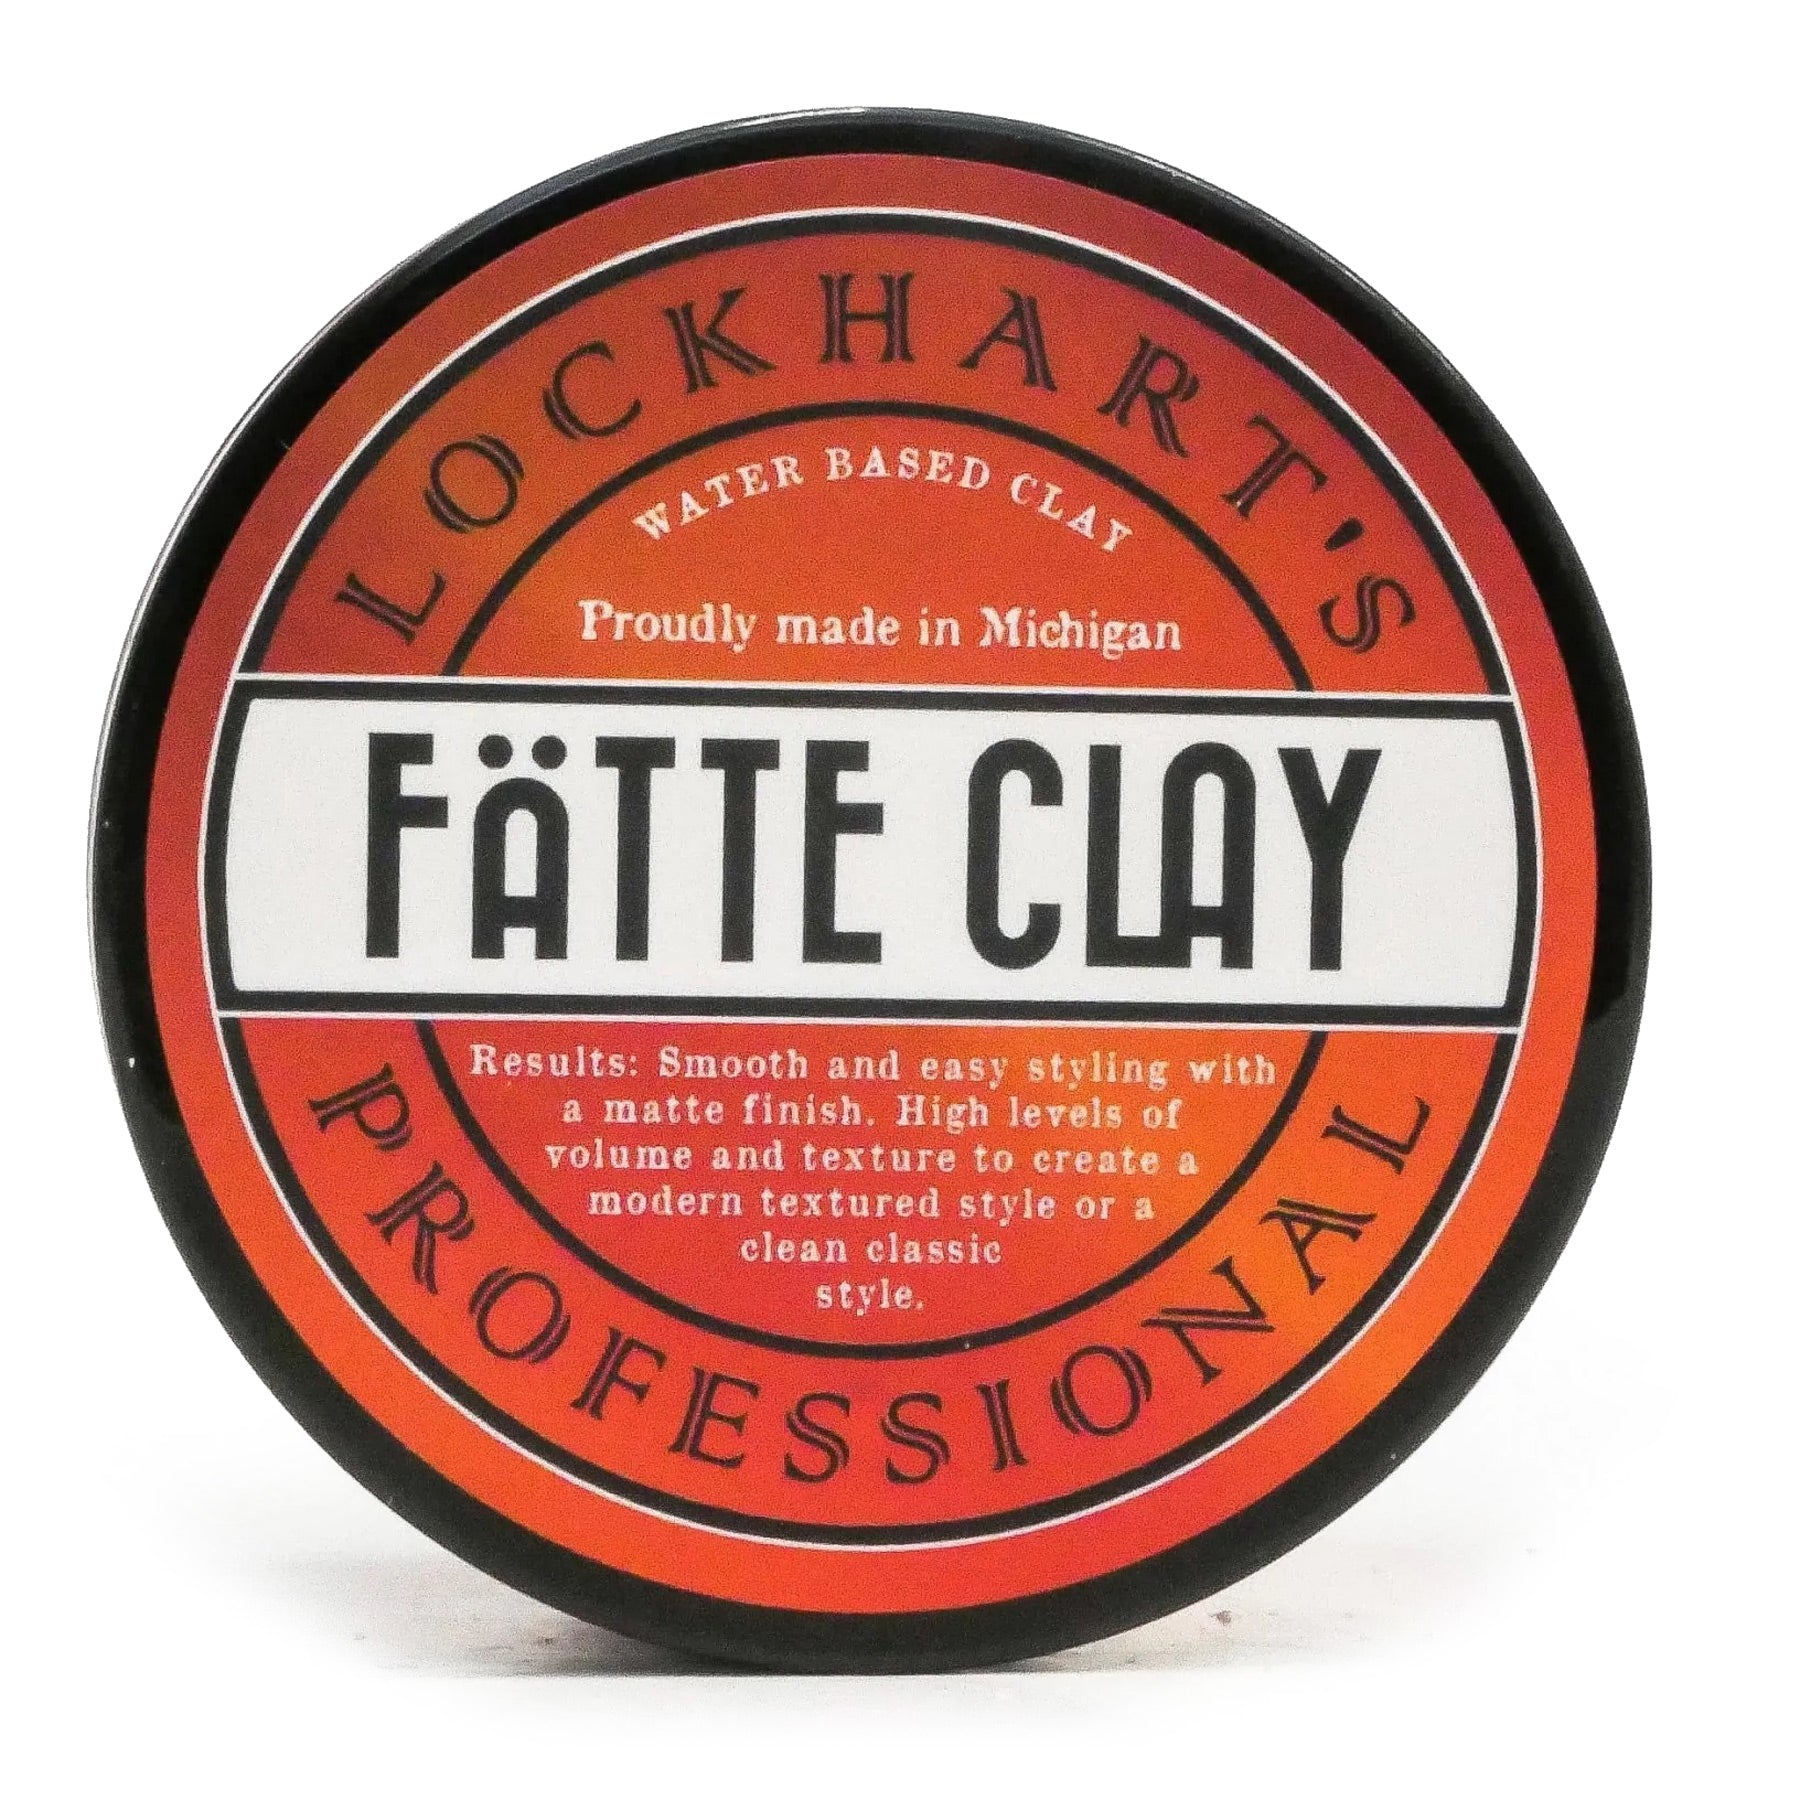 Fatte clay lockharts